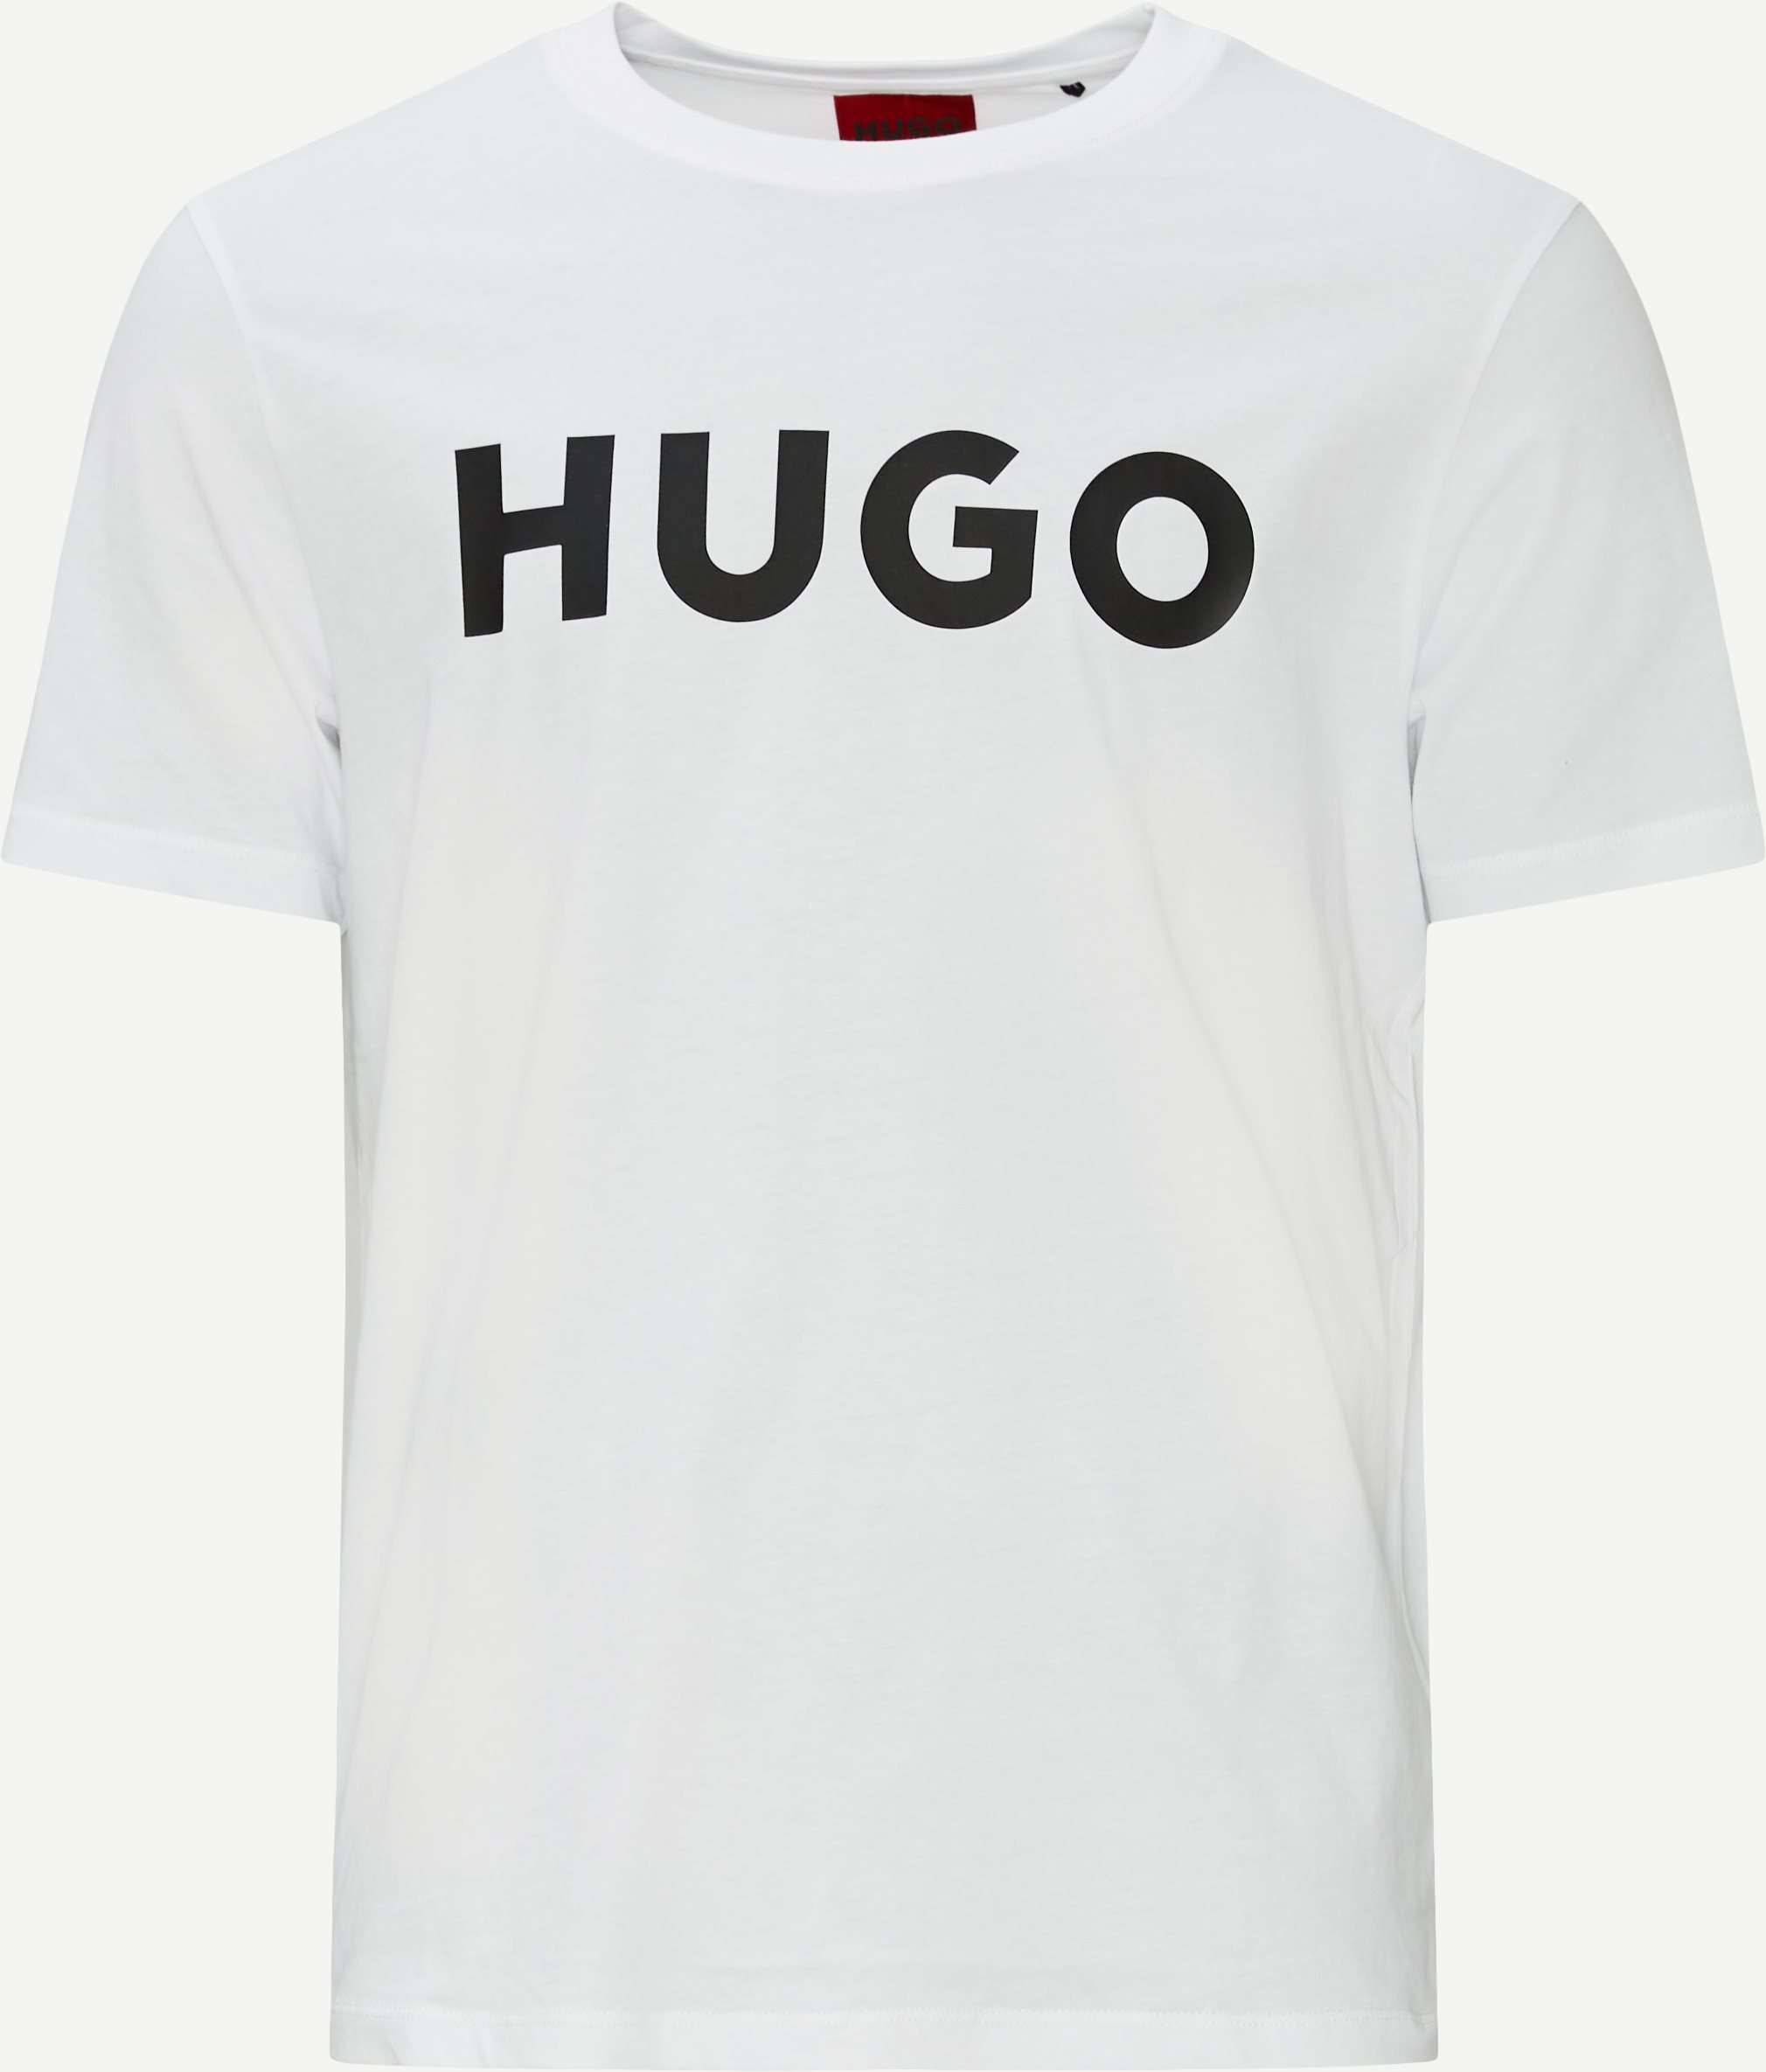 Dulivio T-shirt - T-shirts - Regular fit - White